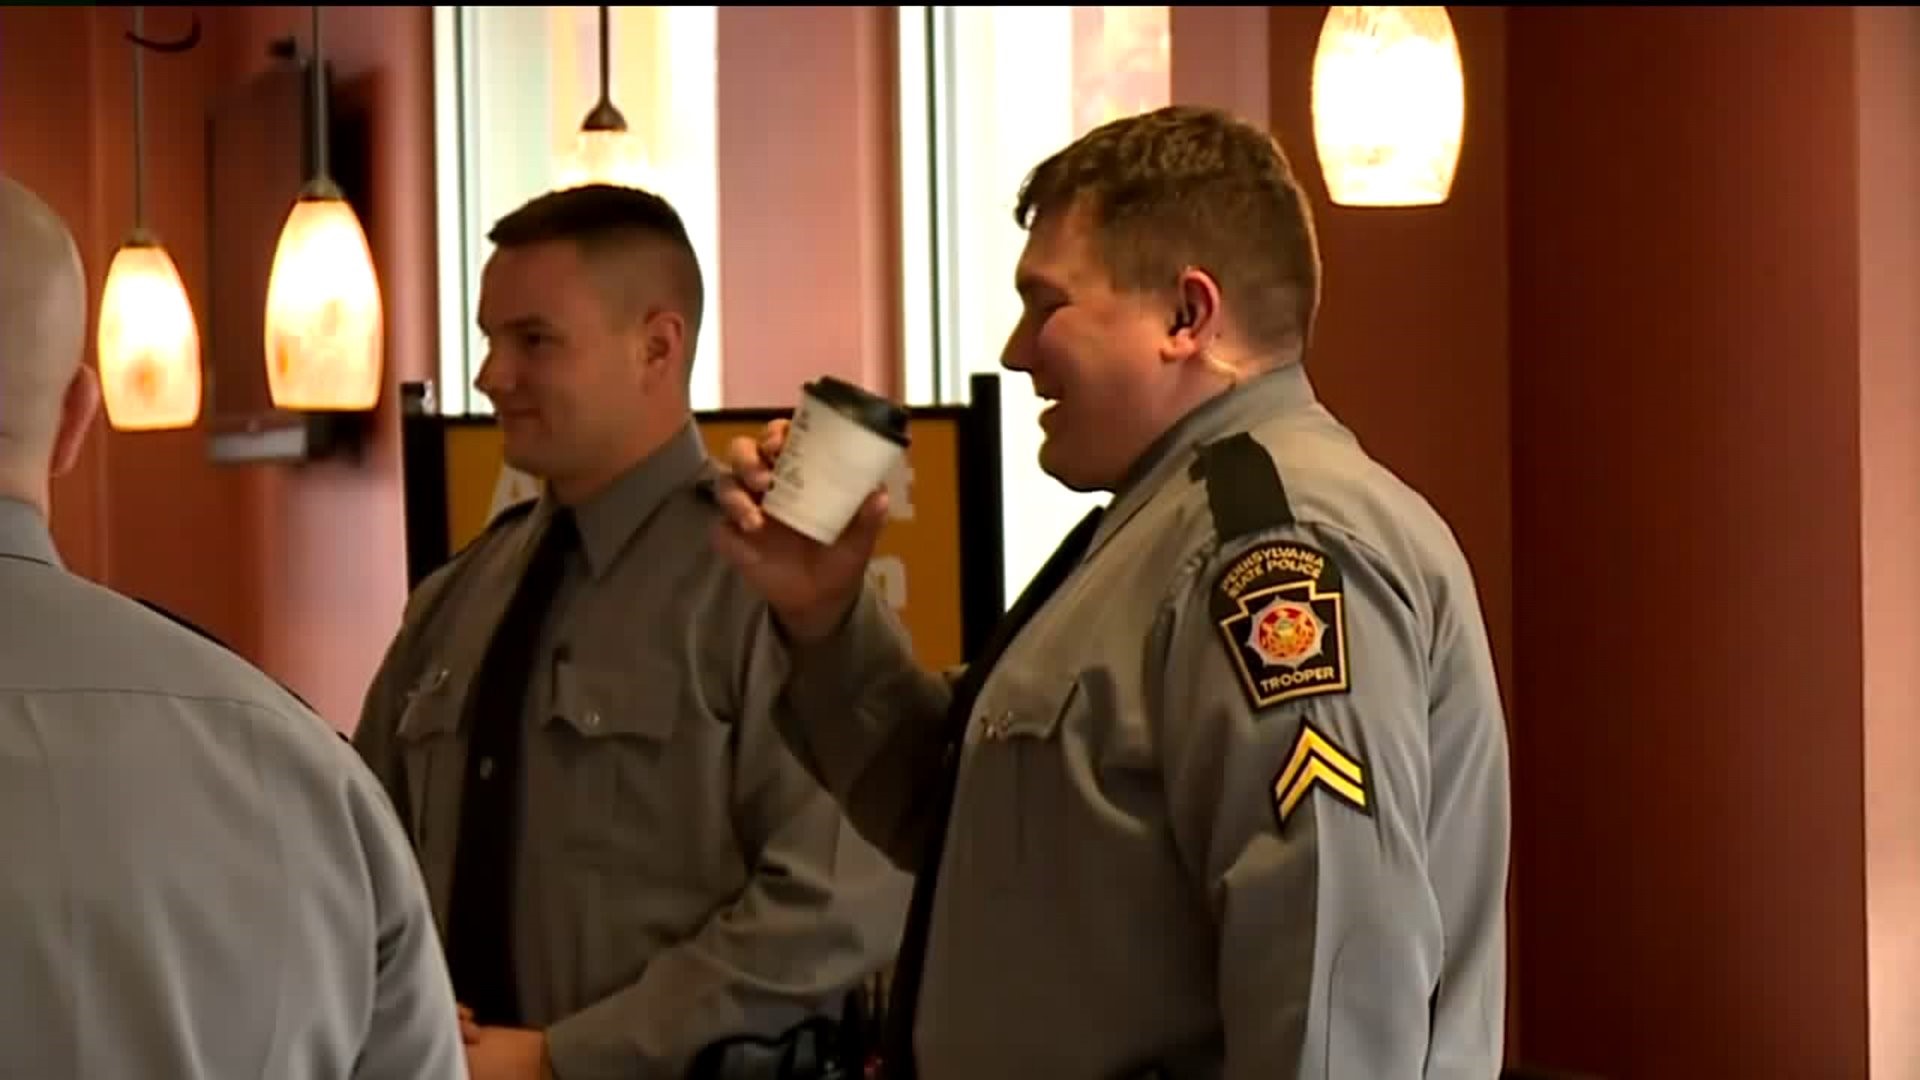 Coffee with a Cop in the Poconos